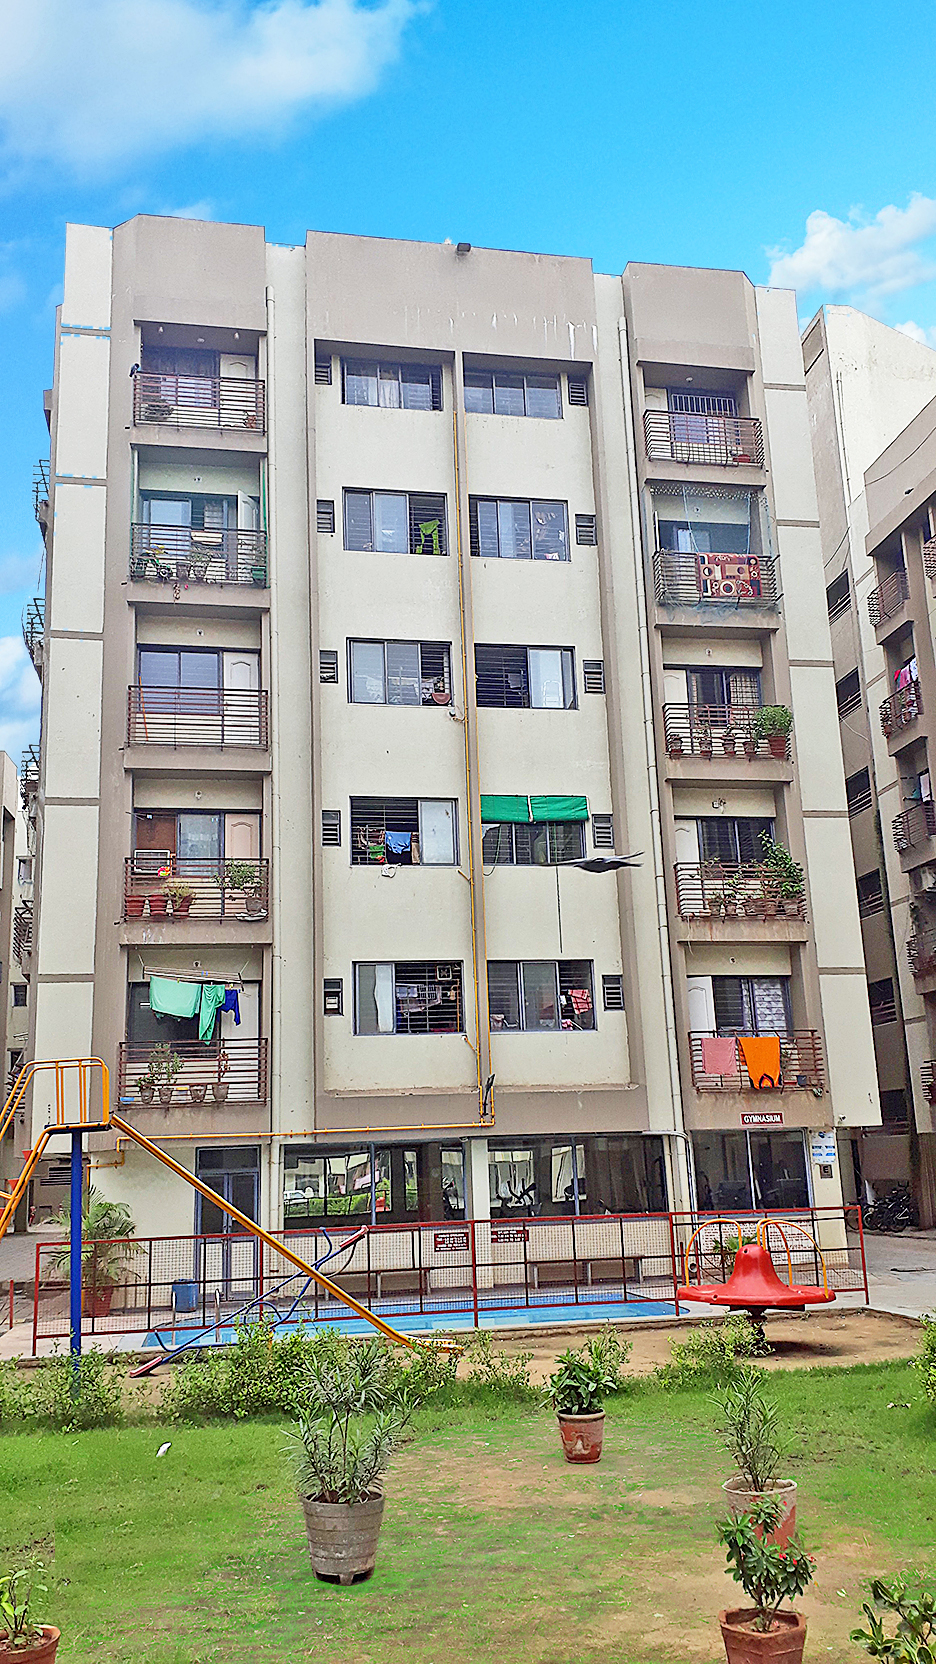 Smarana Apartment